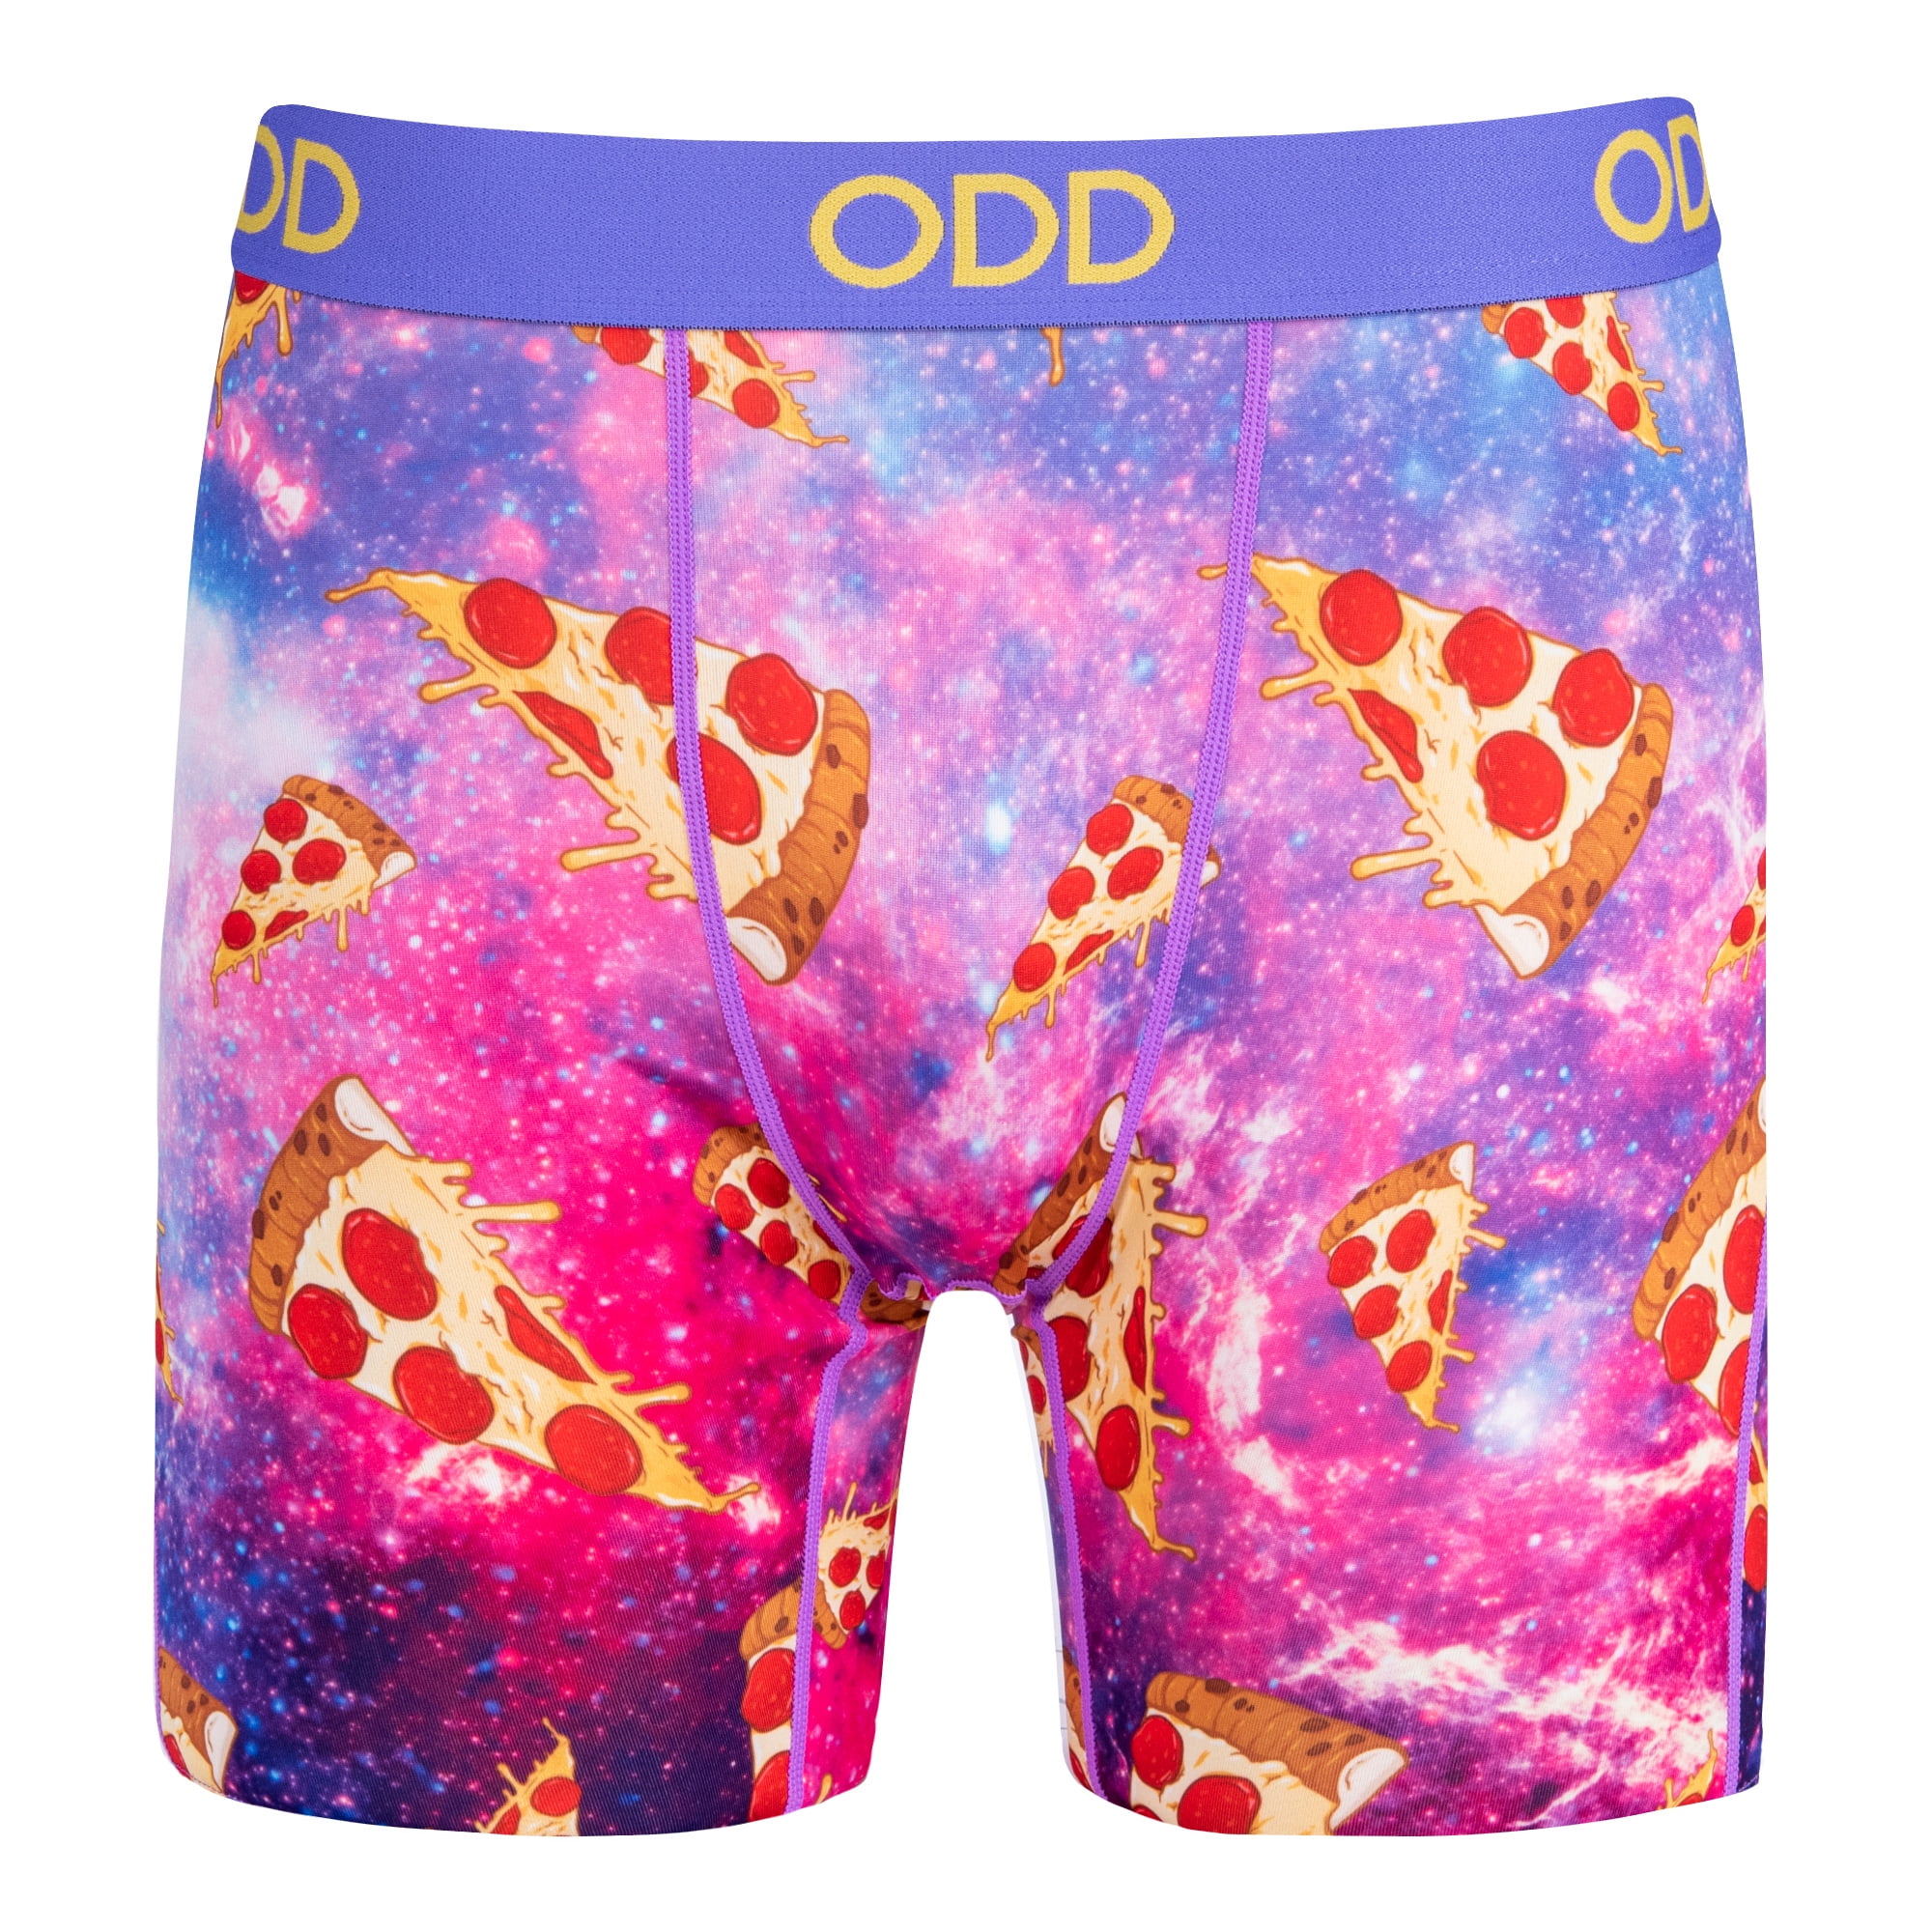 Odd Sox, Space Pizza, Men's Boxer Briefs, Funny Novelty Underwear, XXX Large